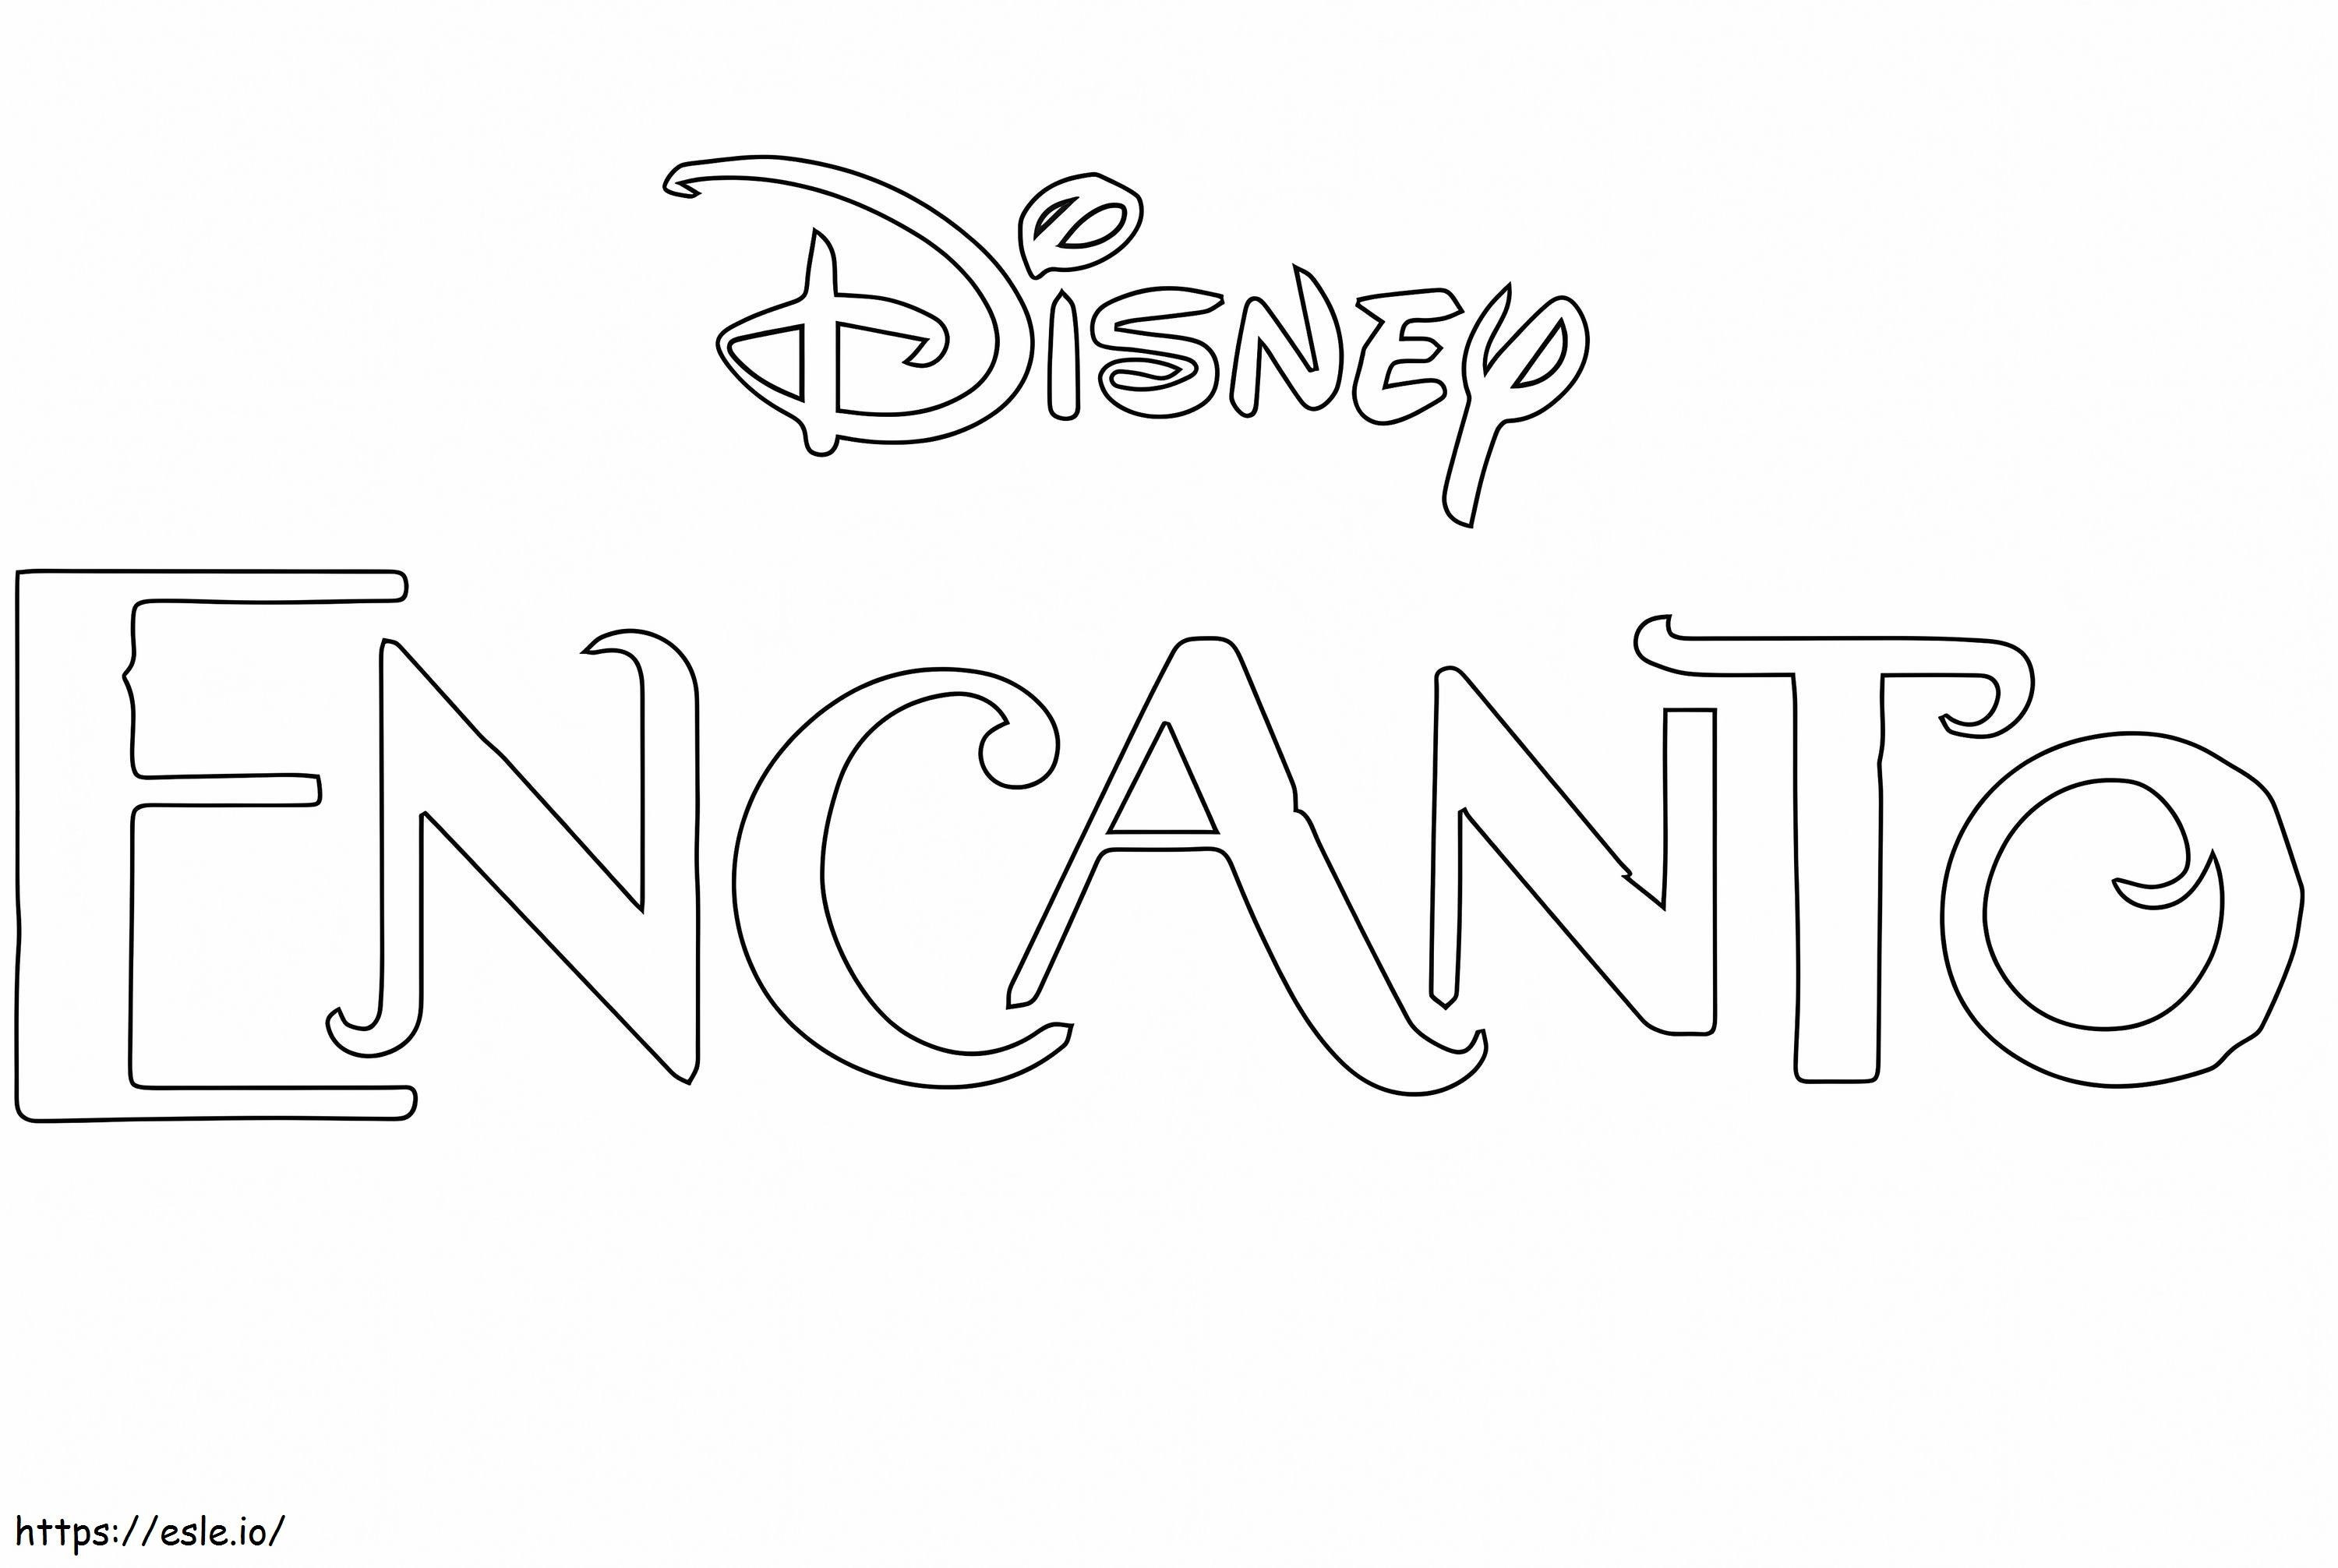 Disney Logo Charm coloring page